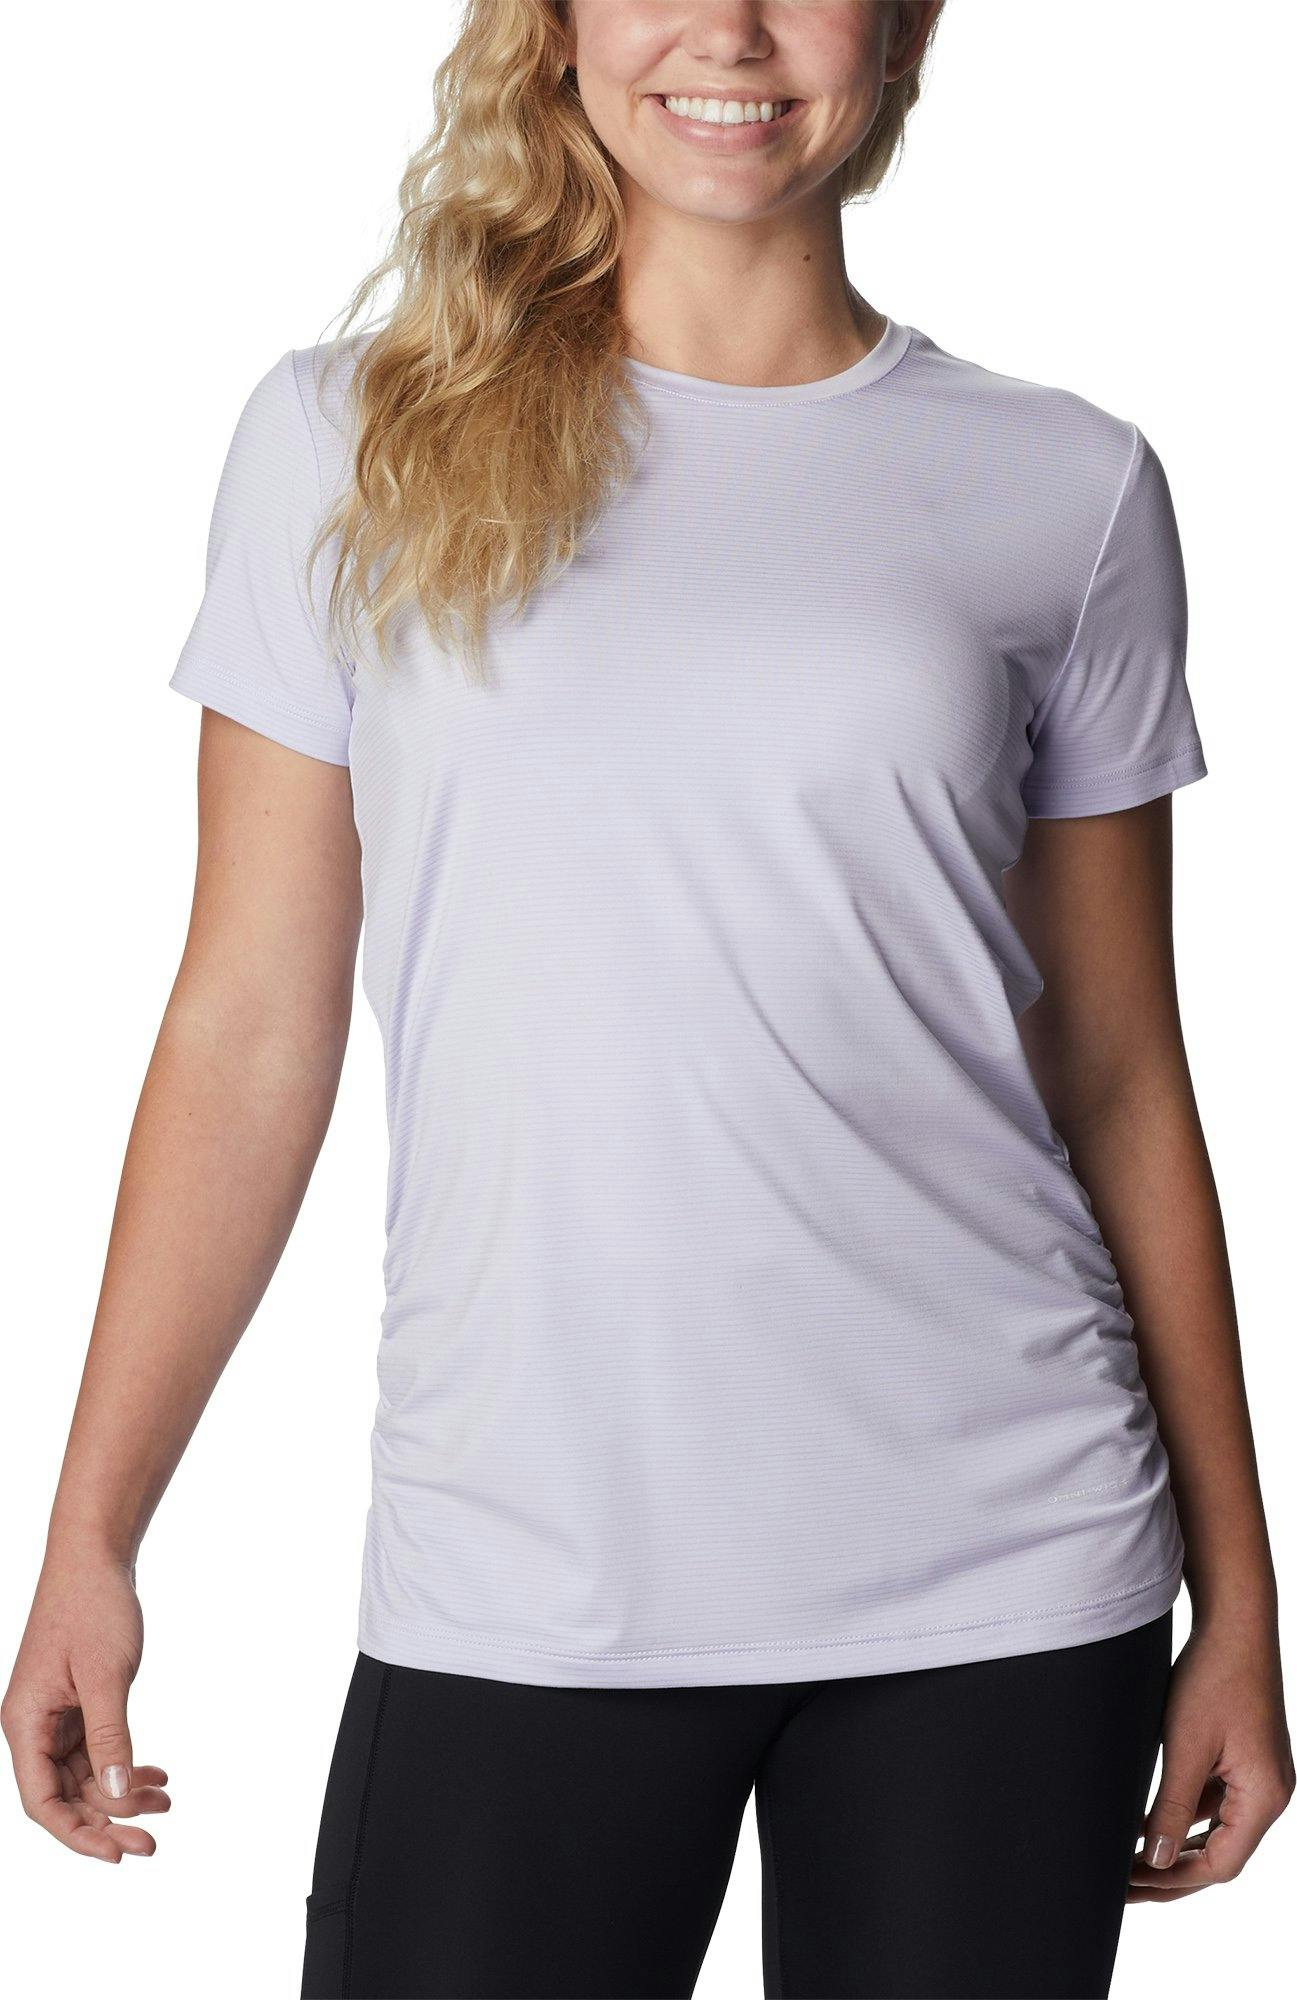 Product image for Leslie Falls Short Sleeve Shirt - Women's